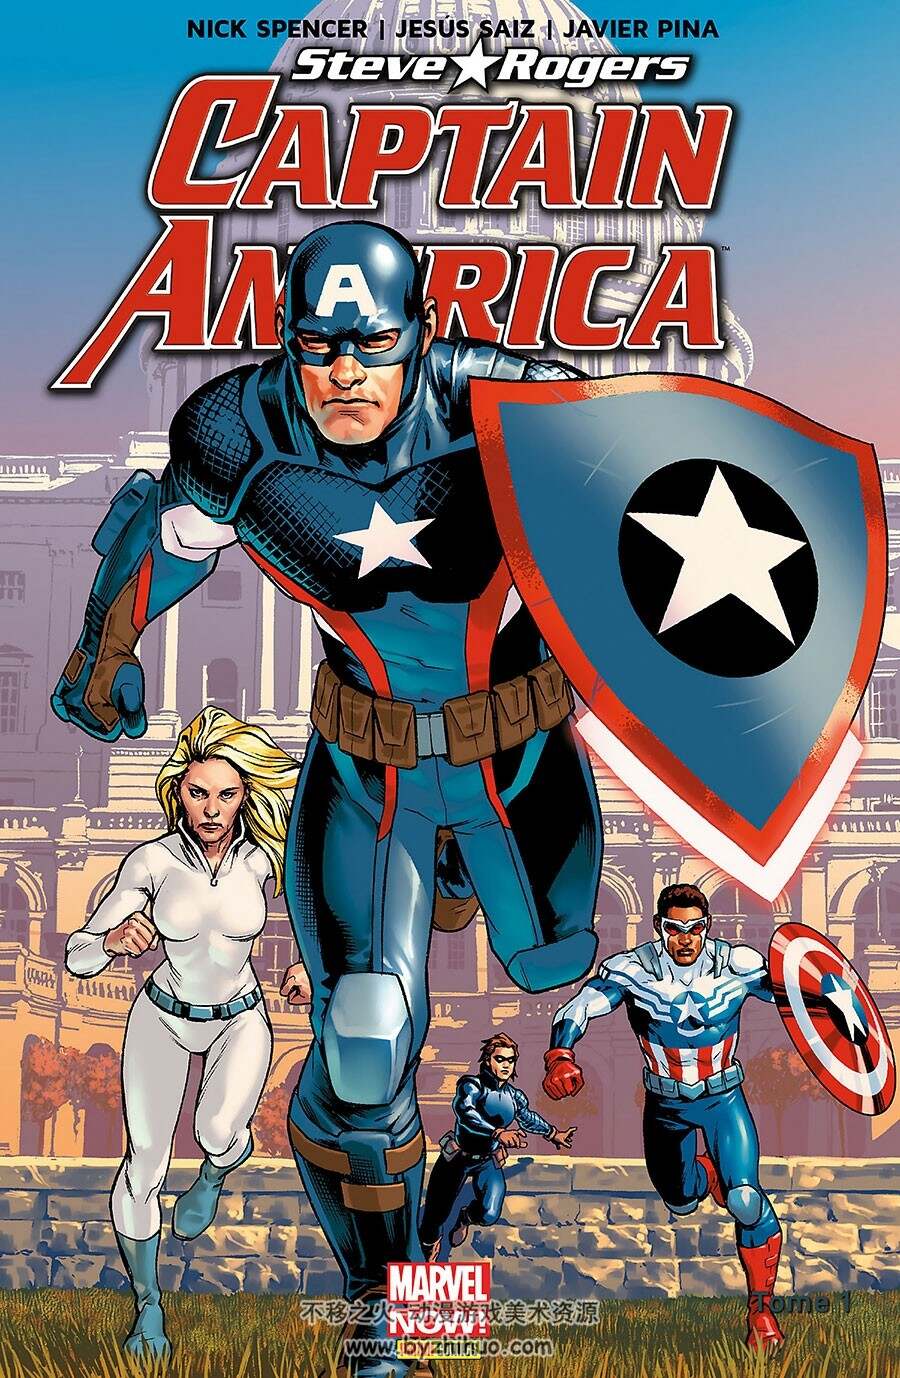 Captain America : Steve Rogers 1-2册 Nick Spencer - Joshua Corin - Gerry Duggan 漫